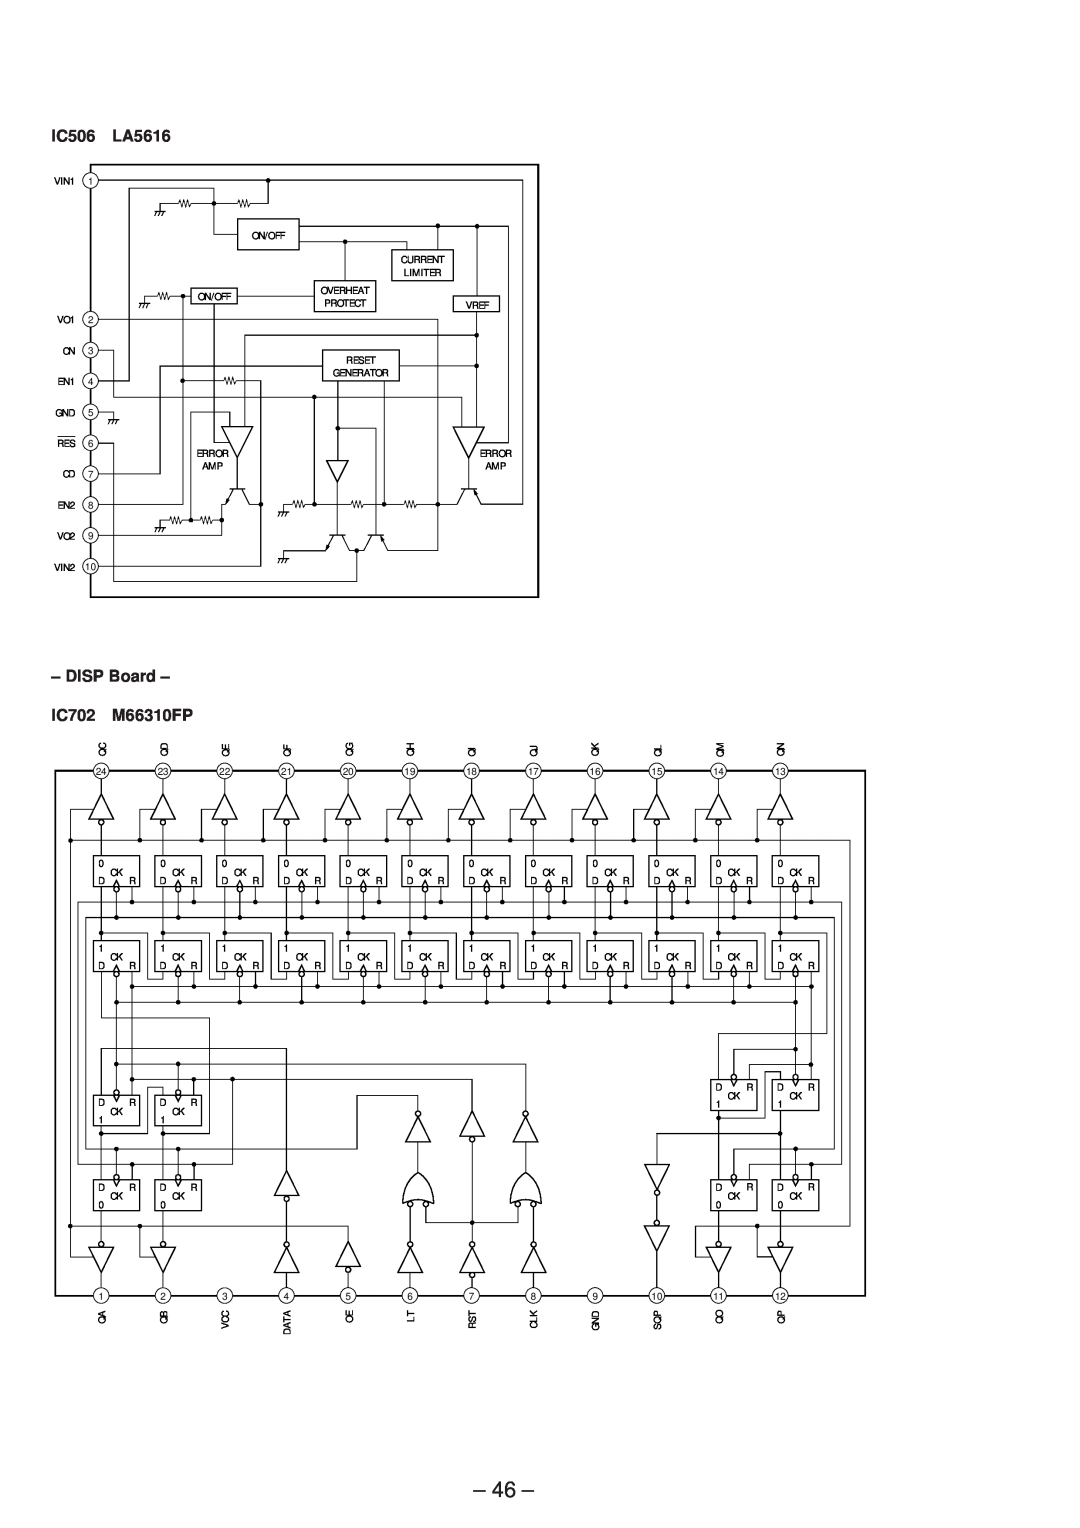 Sony Ericsson CDP-CX220 service manual IC506, LA5616, DISP Board, IC702, M66310FP 